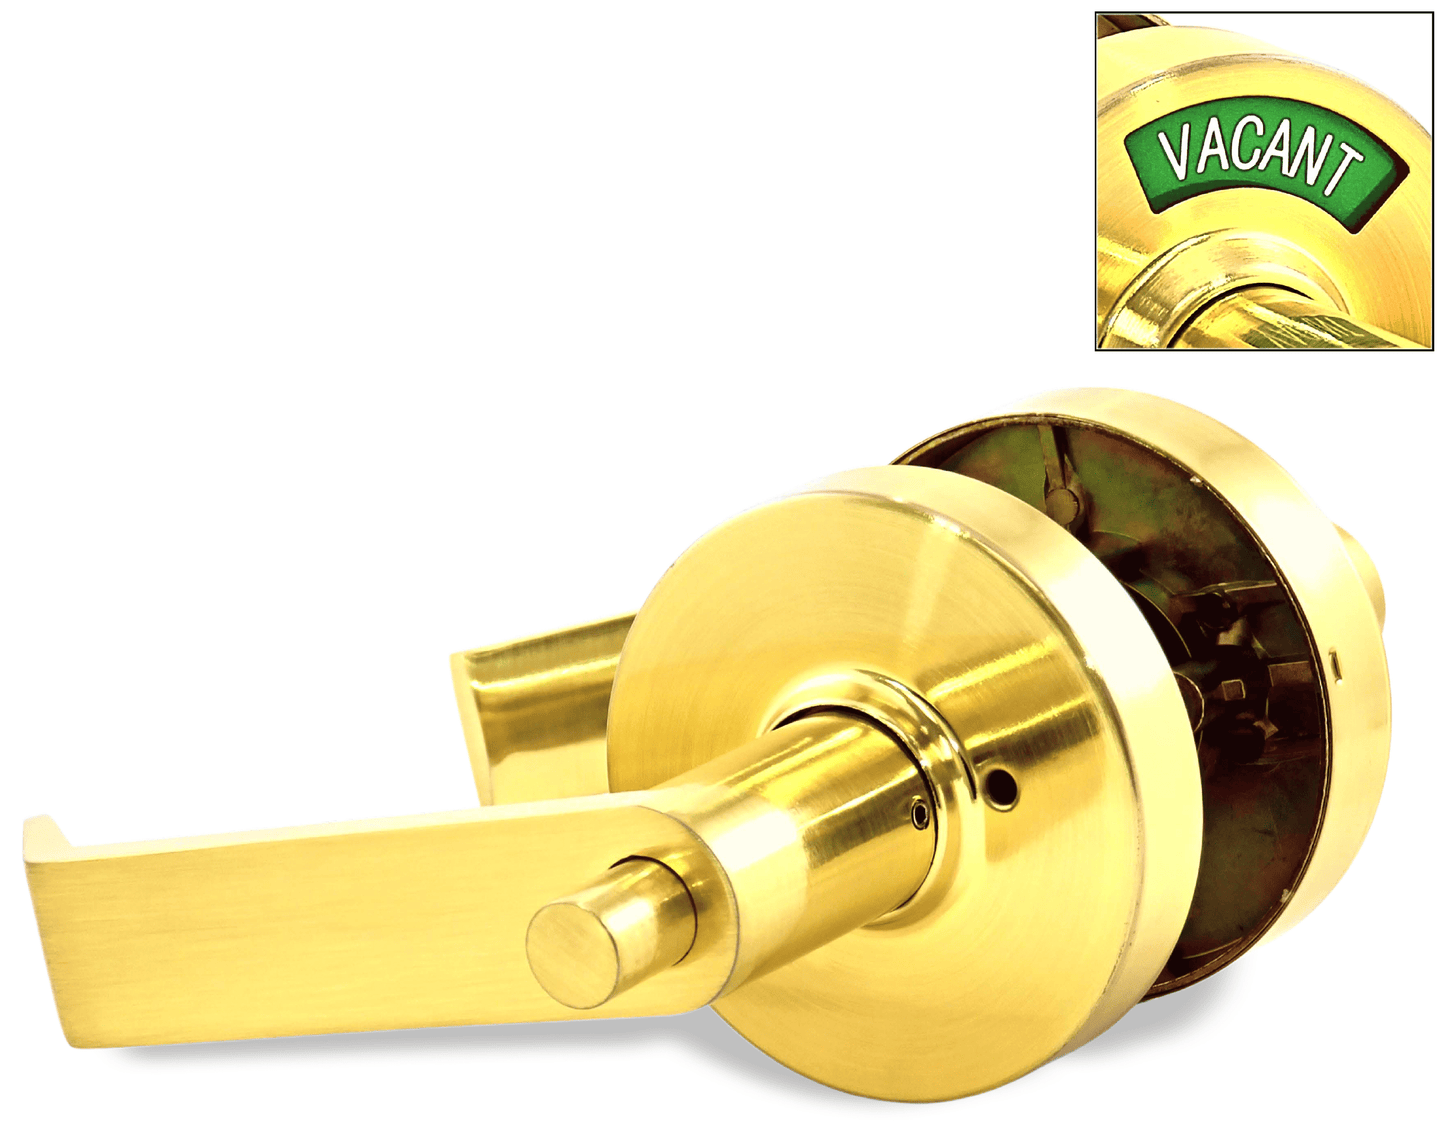 ADA Door Lock with Indicator in Satin Brass - Right-Handed